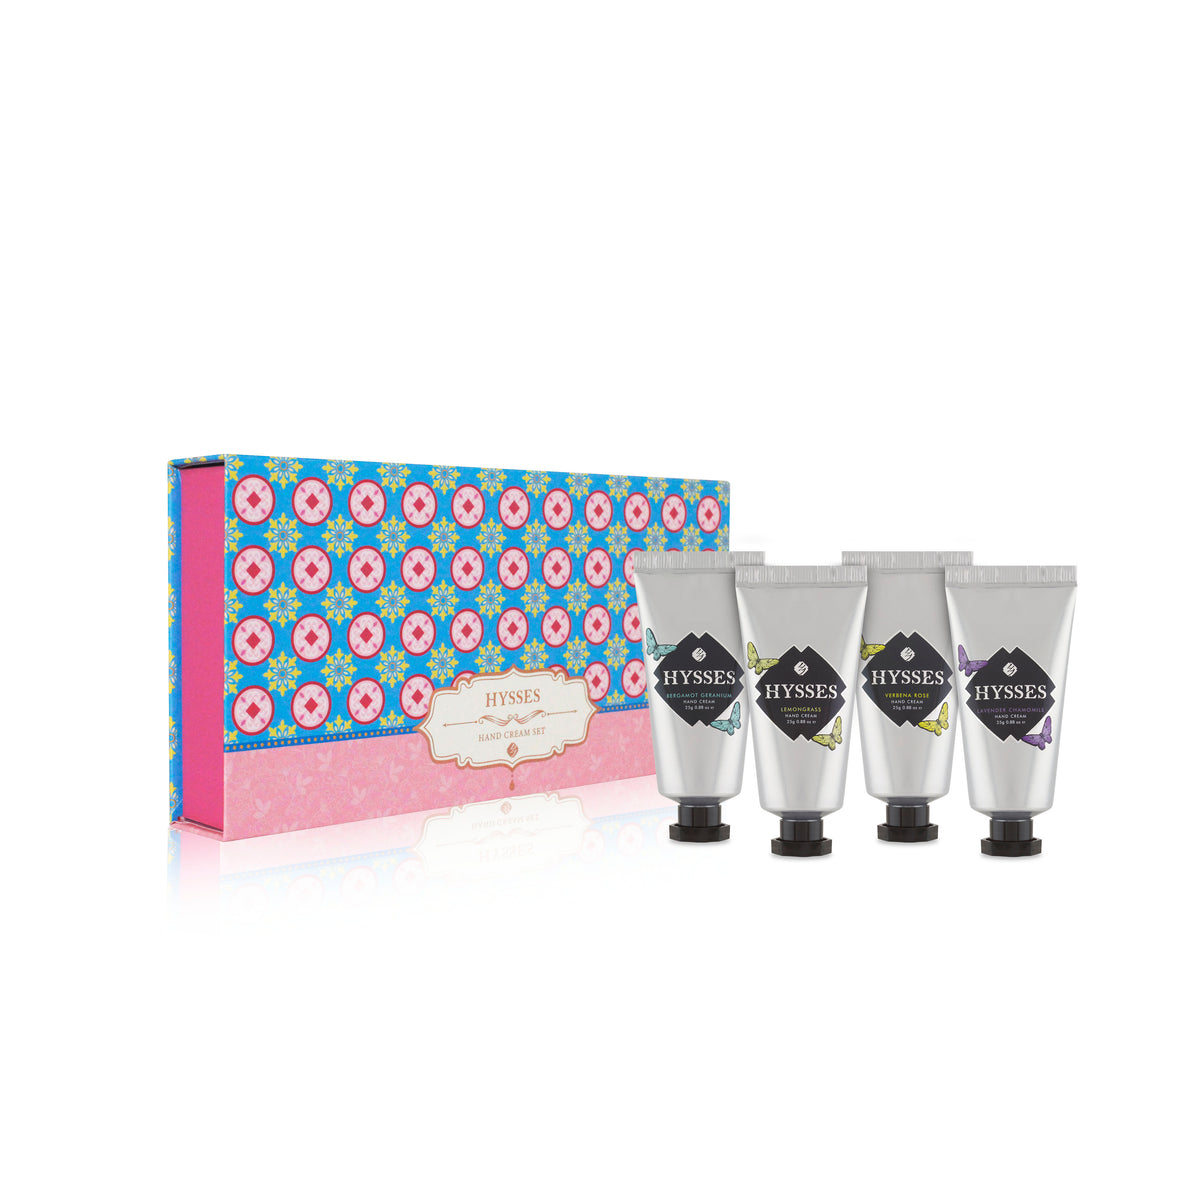 Hand Cream Gift Set of 4 - HYSSES